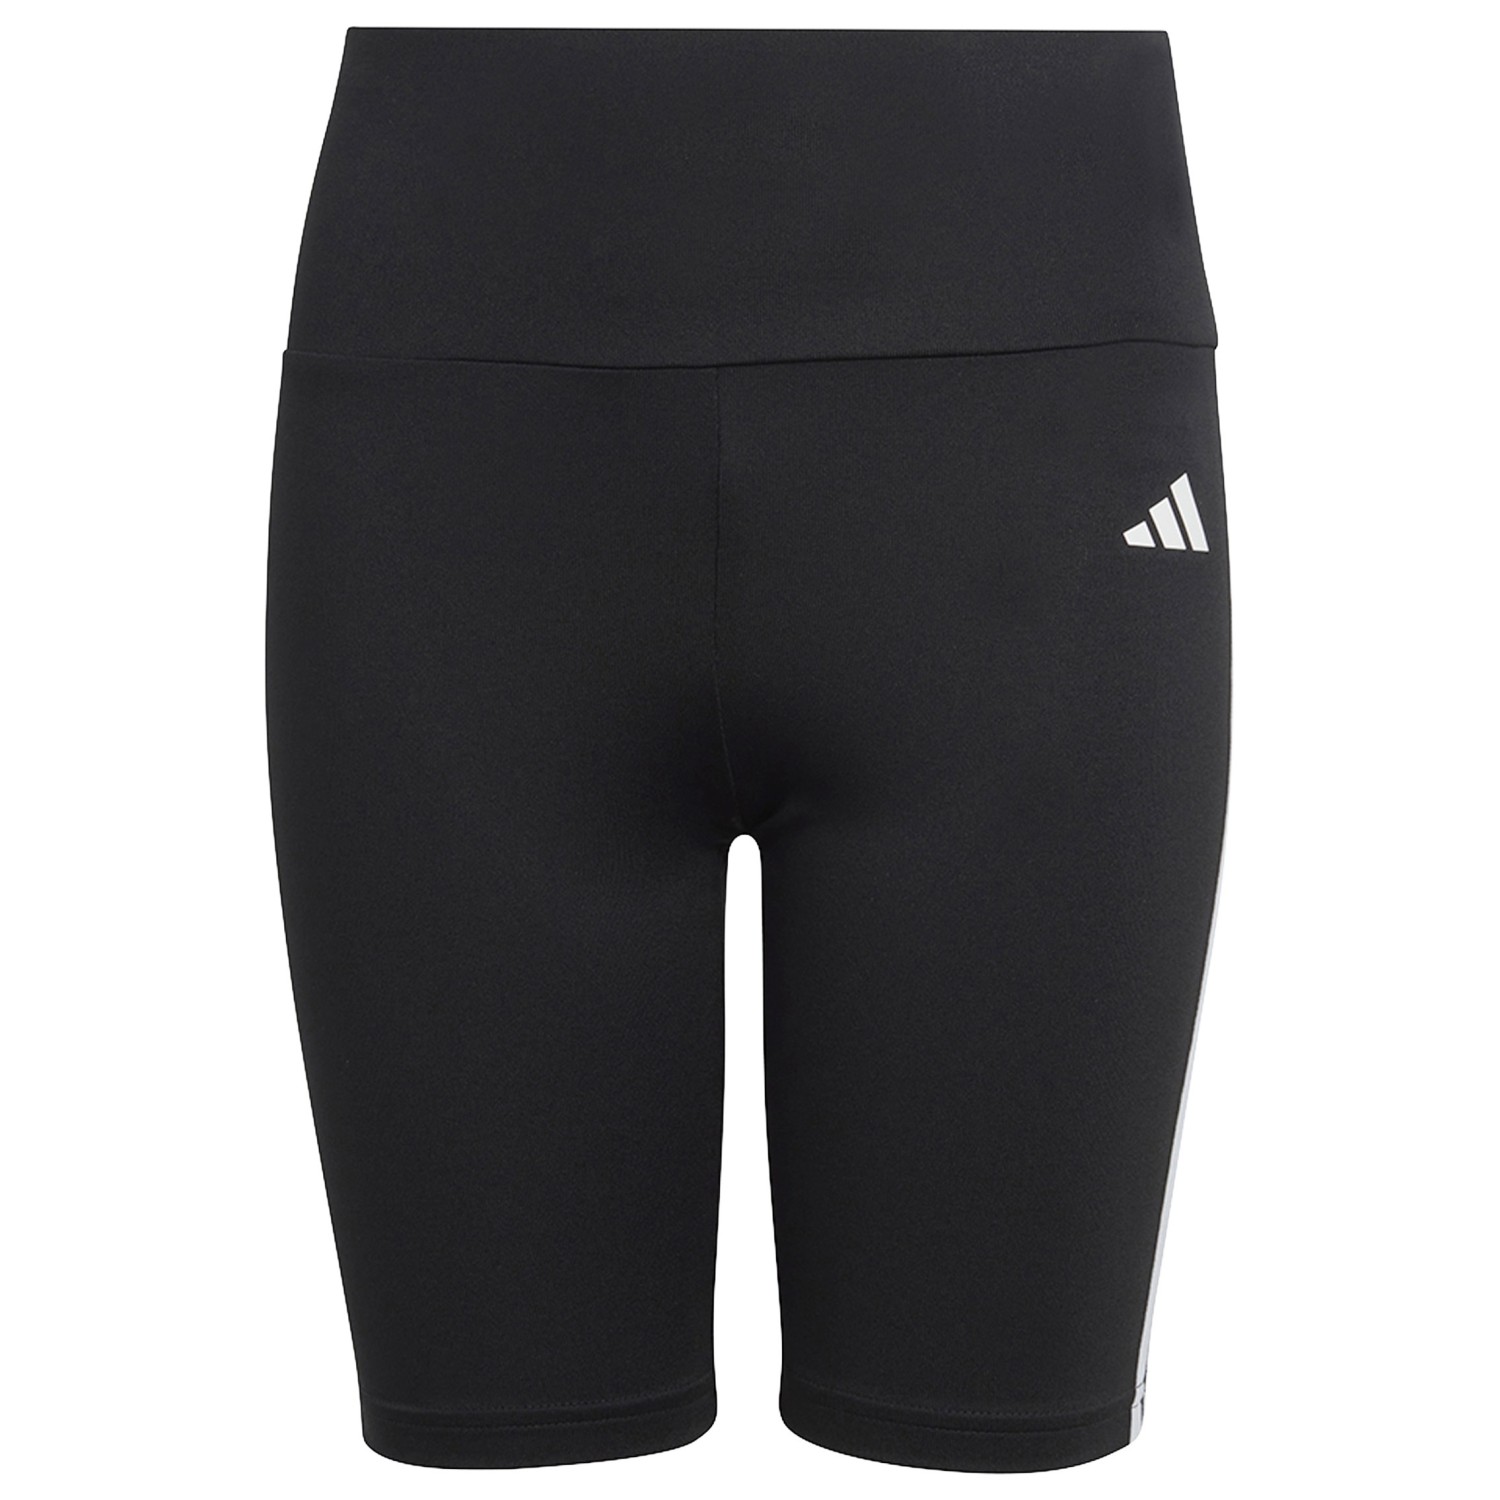 Шорты Adidas Girl's Training Essentials 3S BK, цвет Black/White шорты adidas 4krft sports knitted training black черный